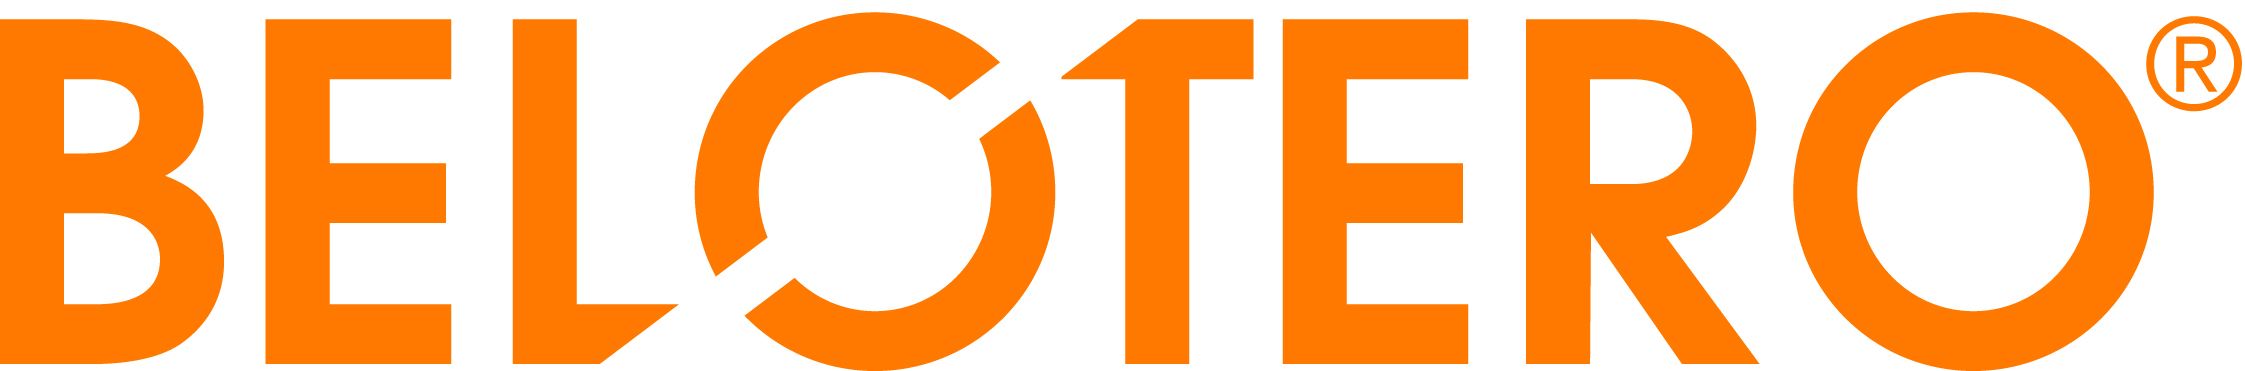 belotero-logo